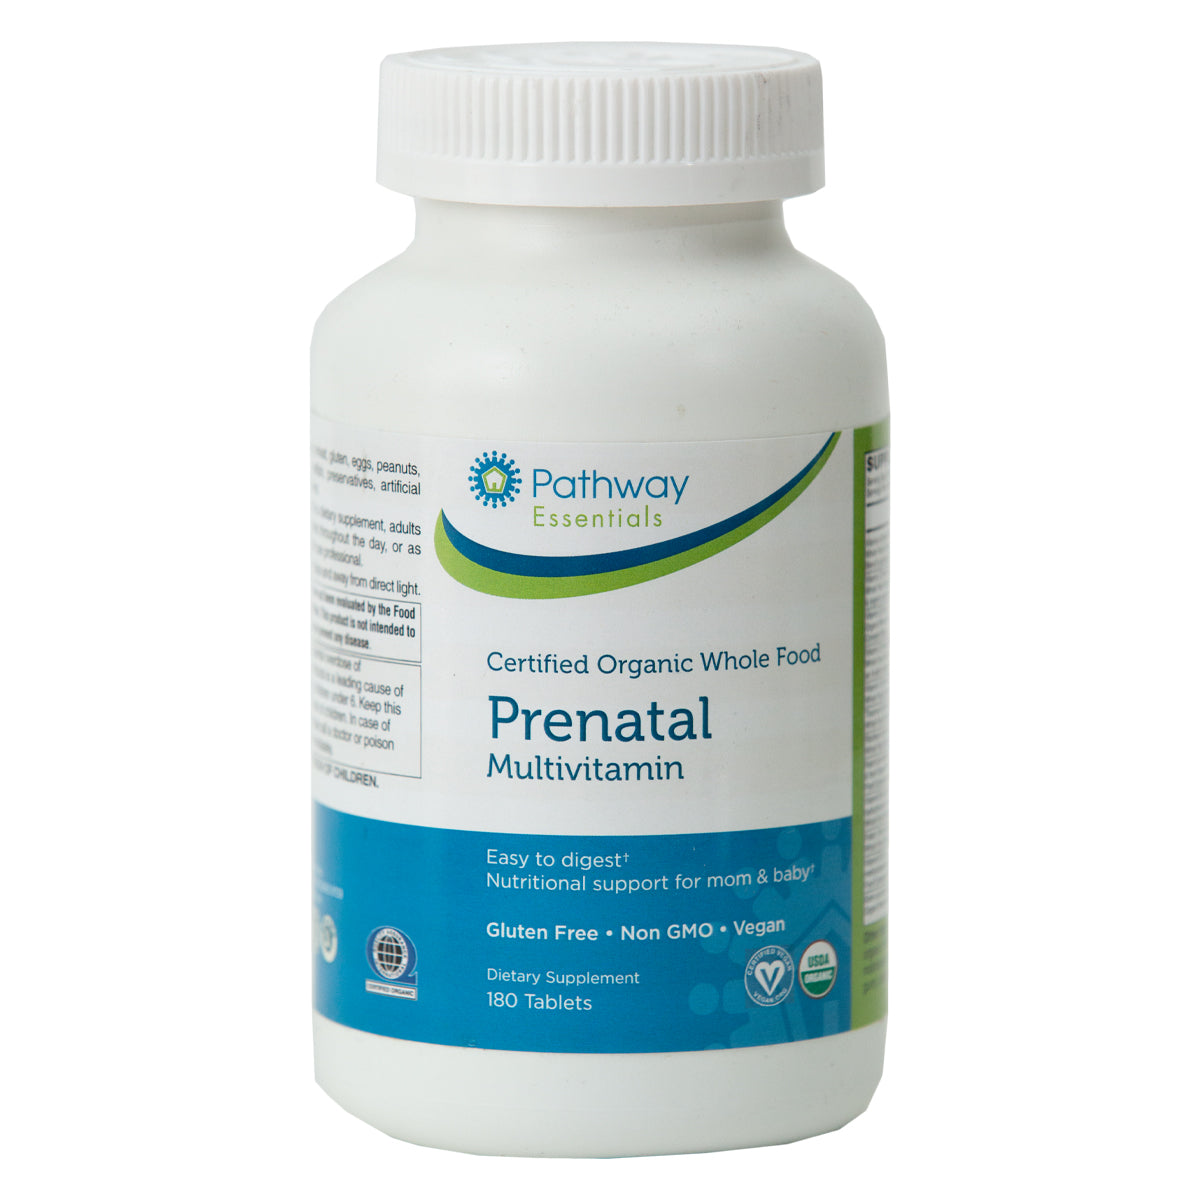 Certified Organic Whole Food Prenatal Multivitamin